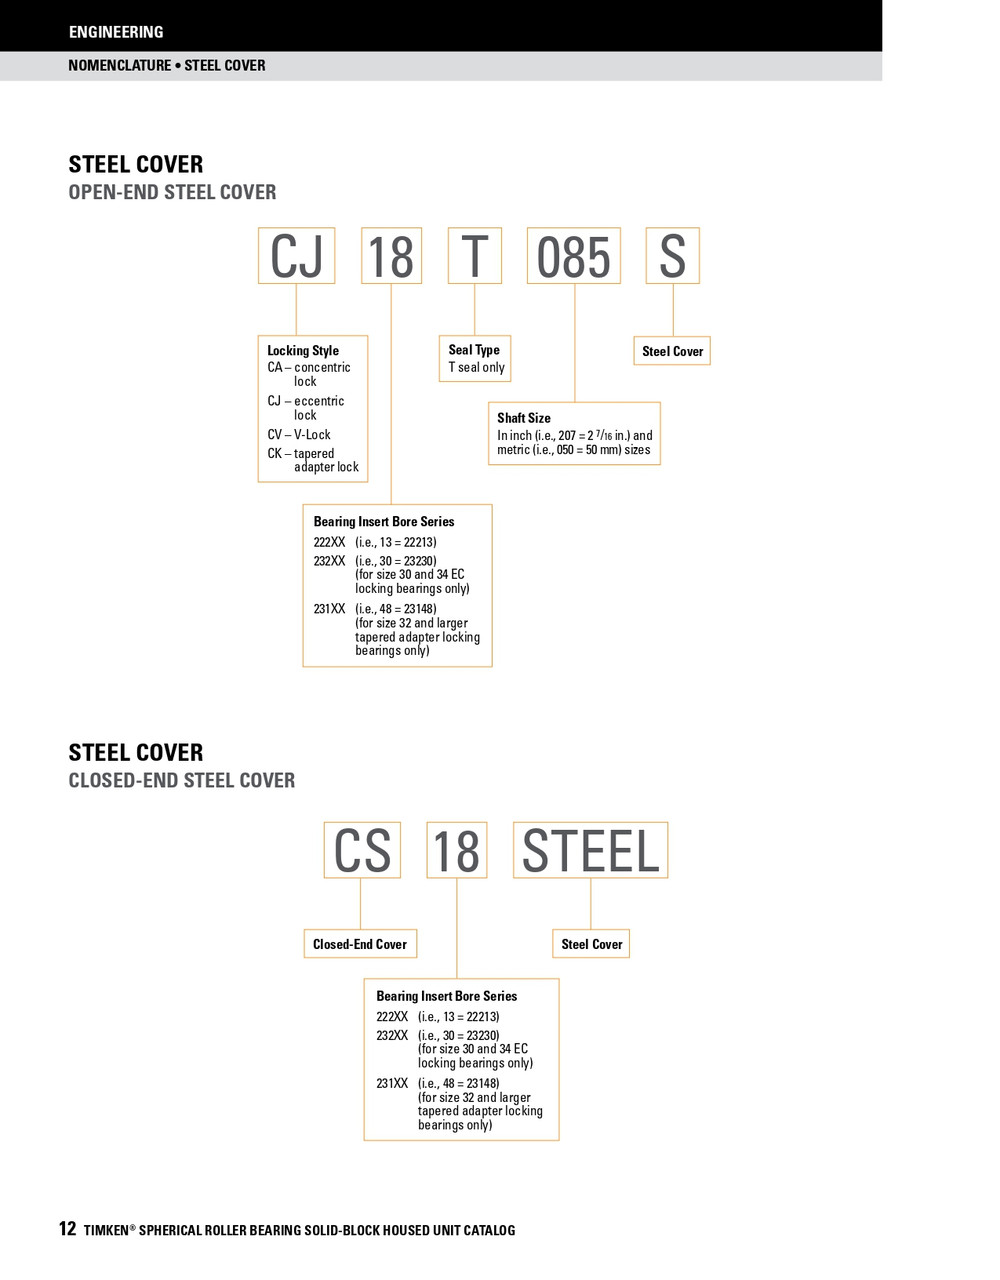 4-1/2" Timken SRB Steel Open End Cover w/Teflon Seal - QV V-Lock® Type   CV26T408S